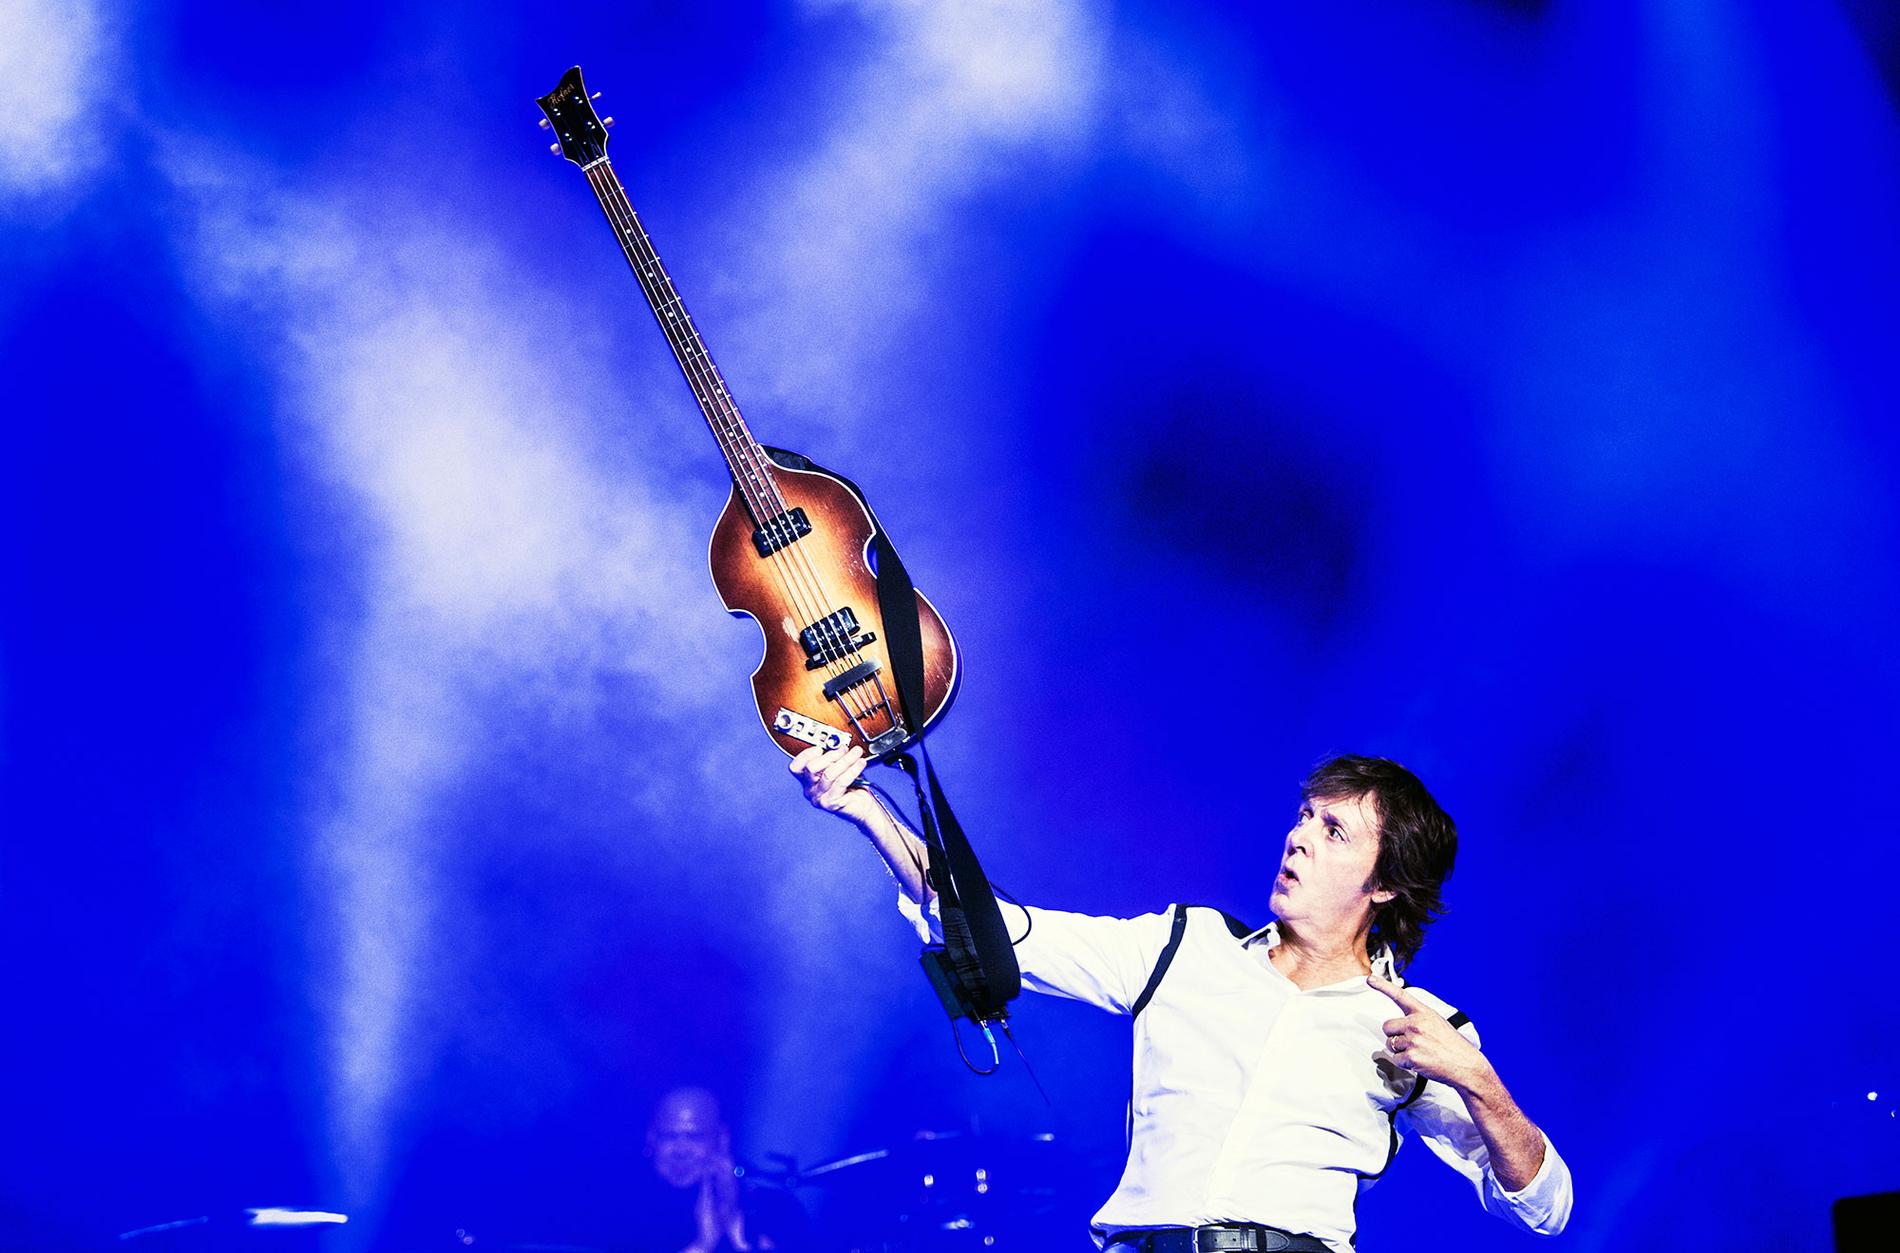 Paul McCartney in action.